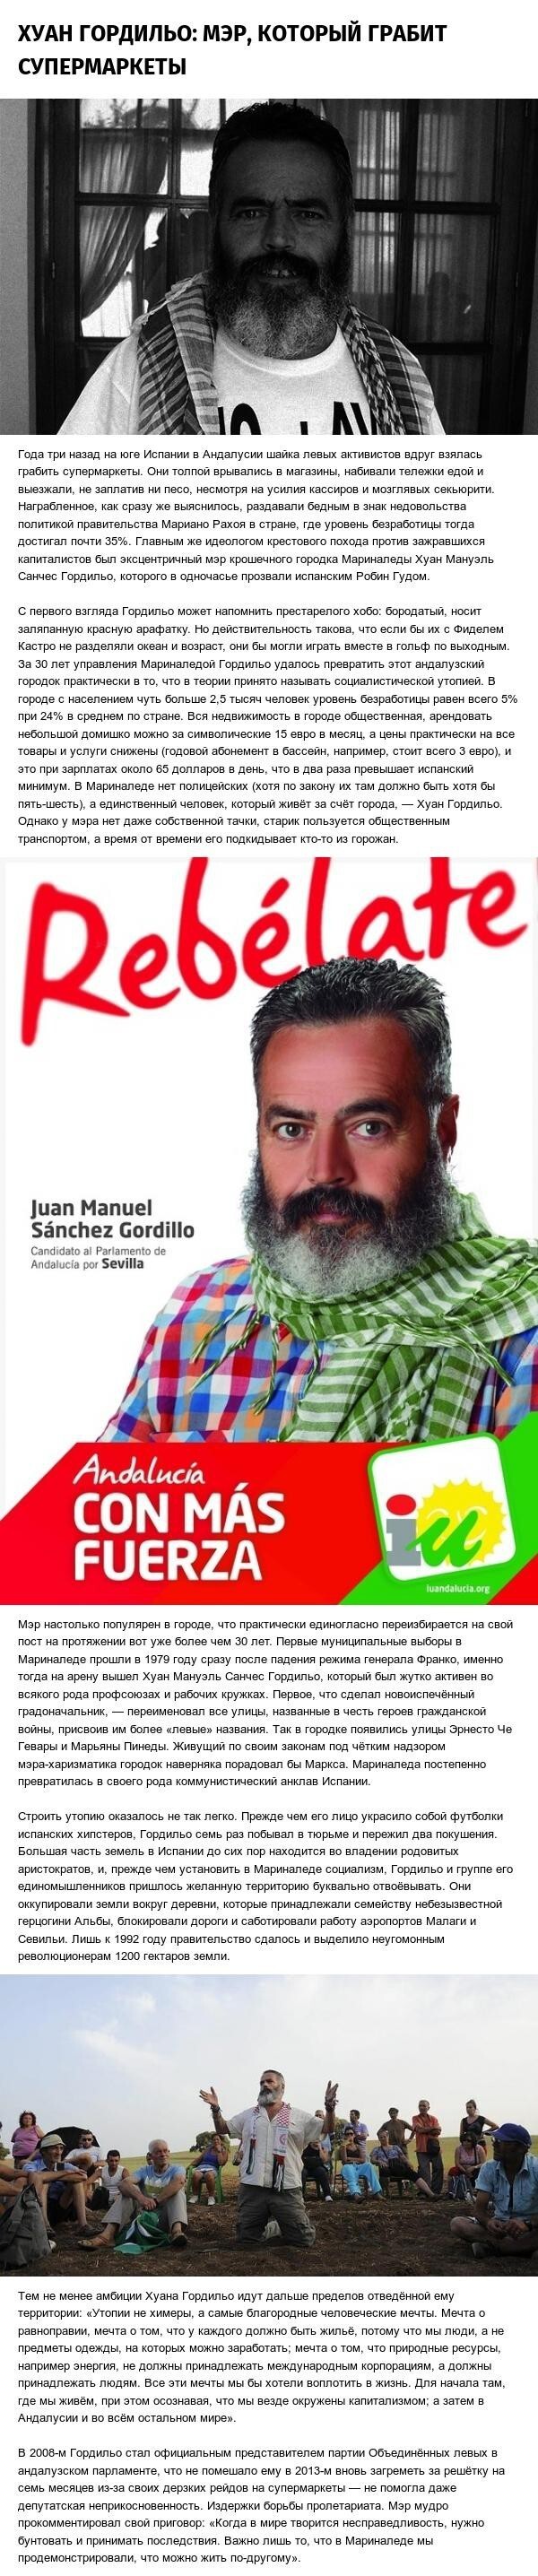 Хуан Гордильо: Мэр, который грабит супермаркеты